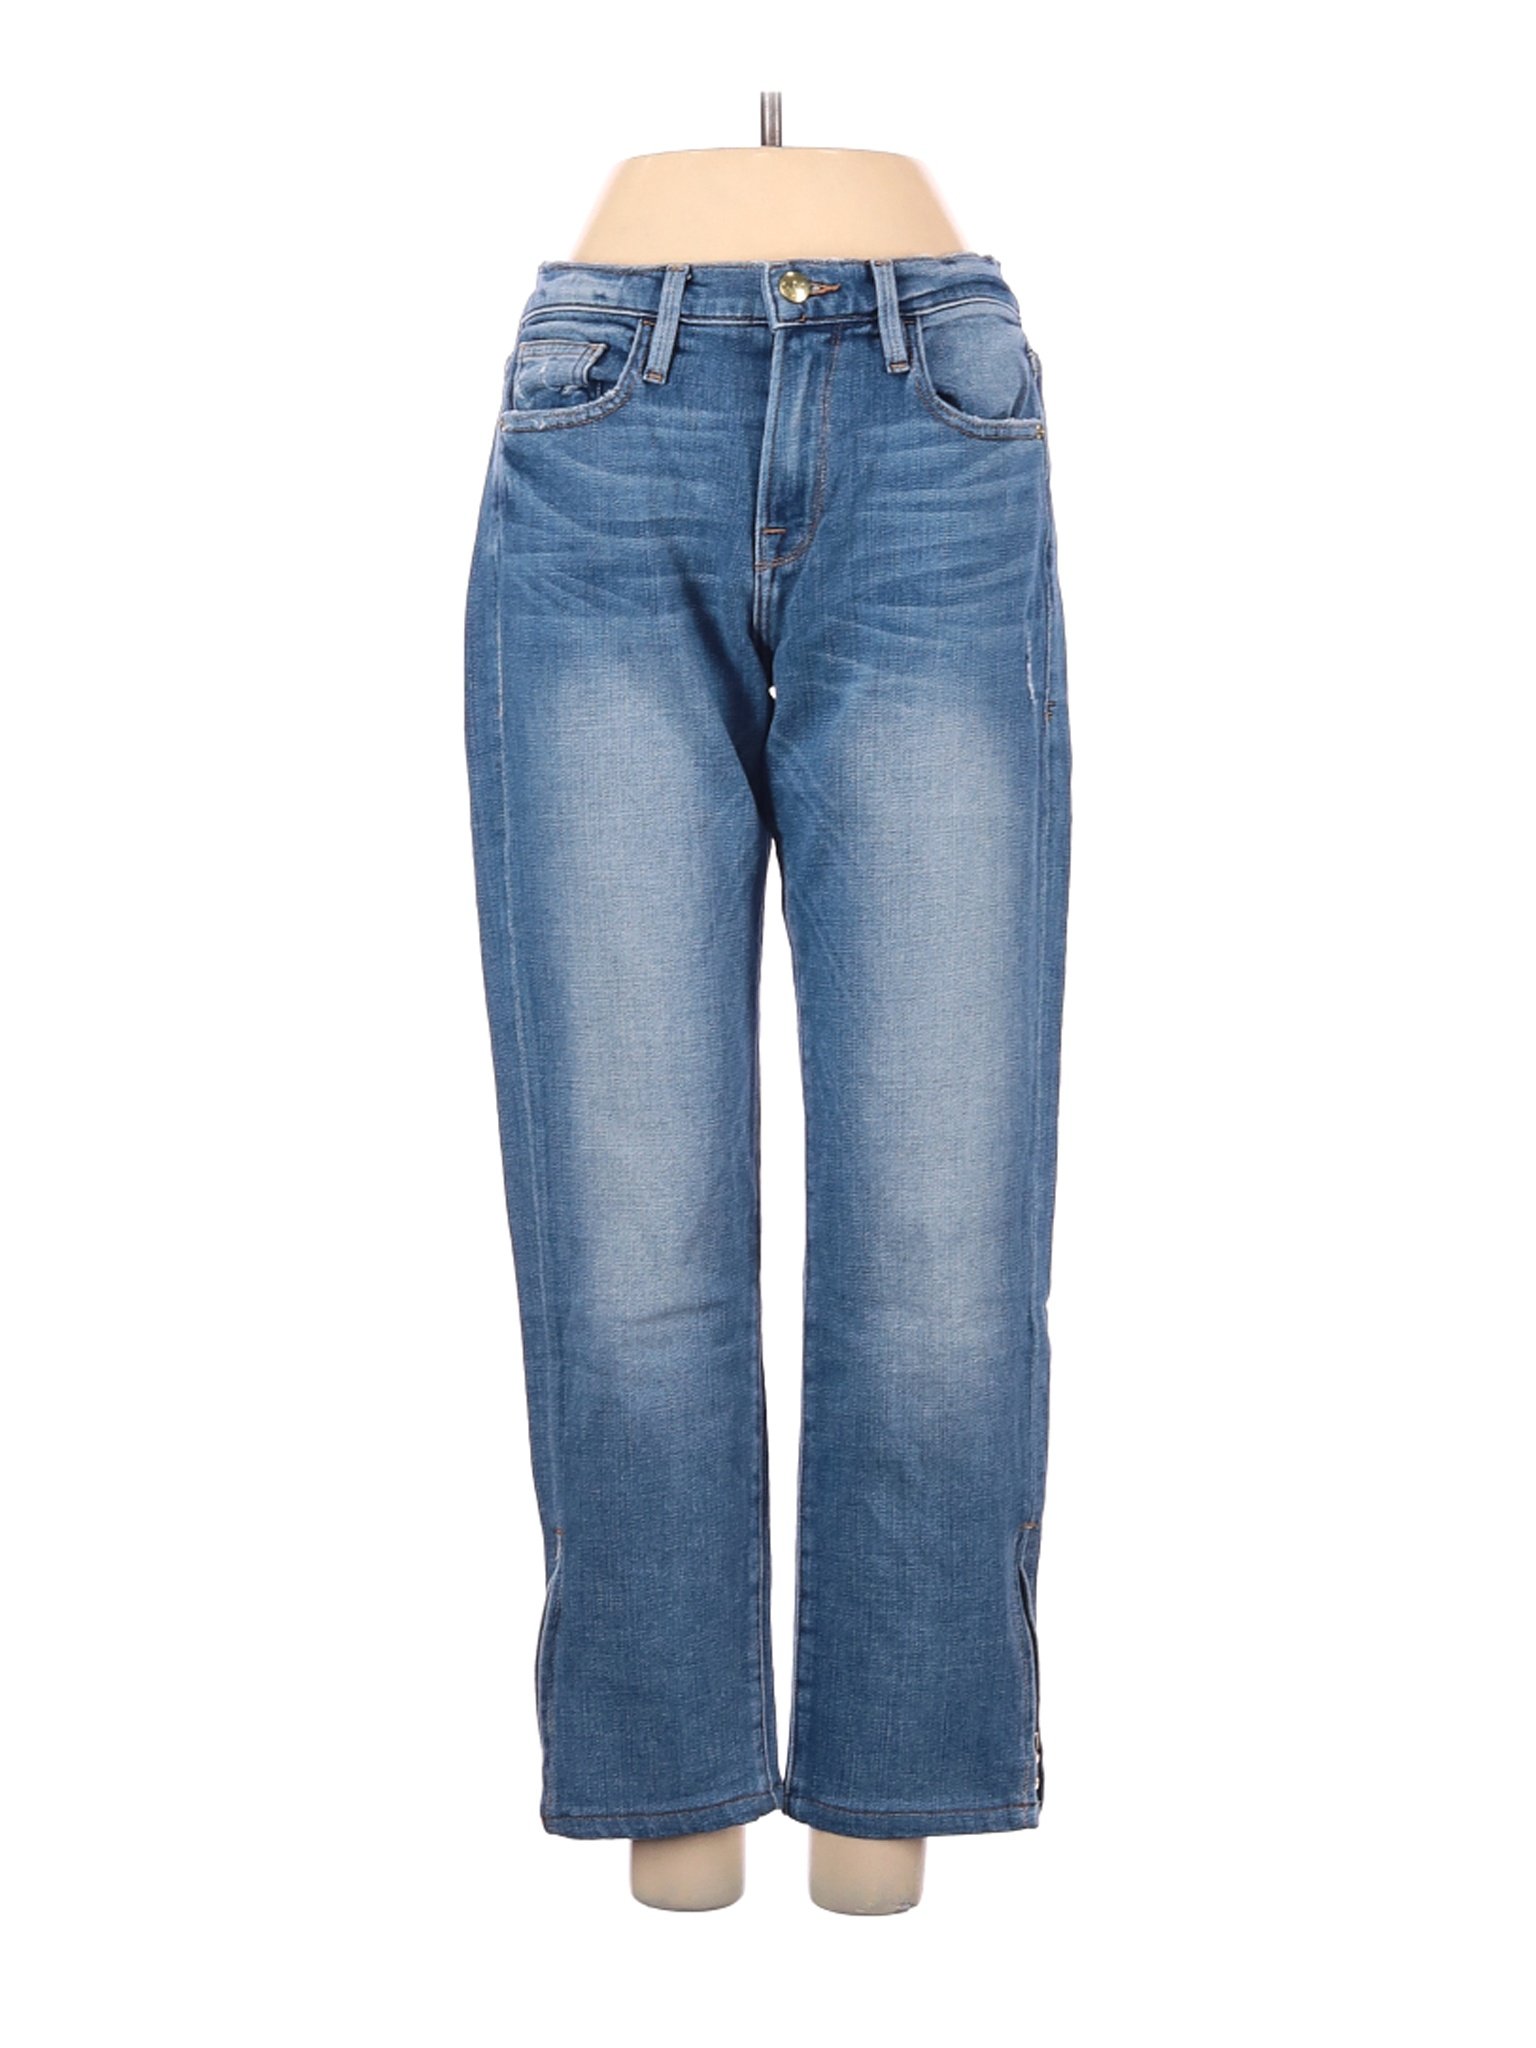 FRAME Denim Women Blue Jeans 27W | eBay